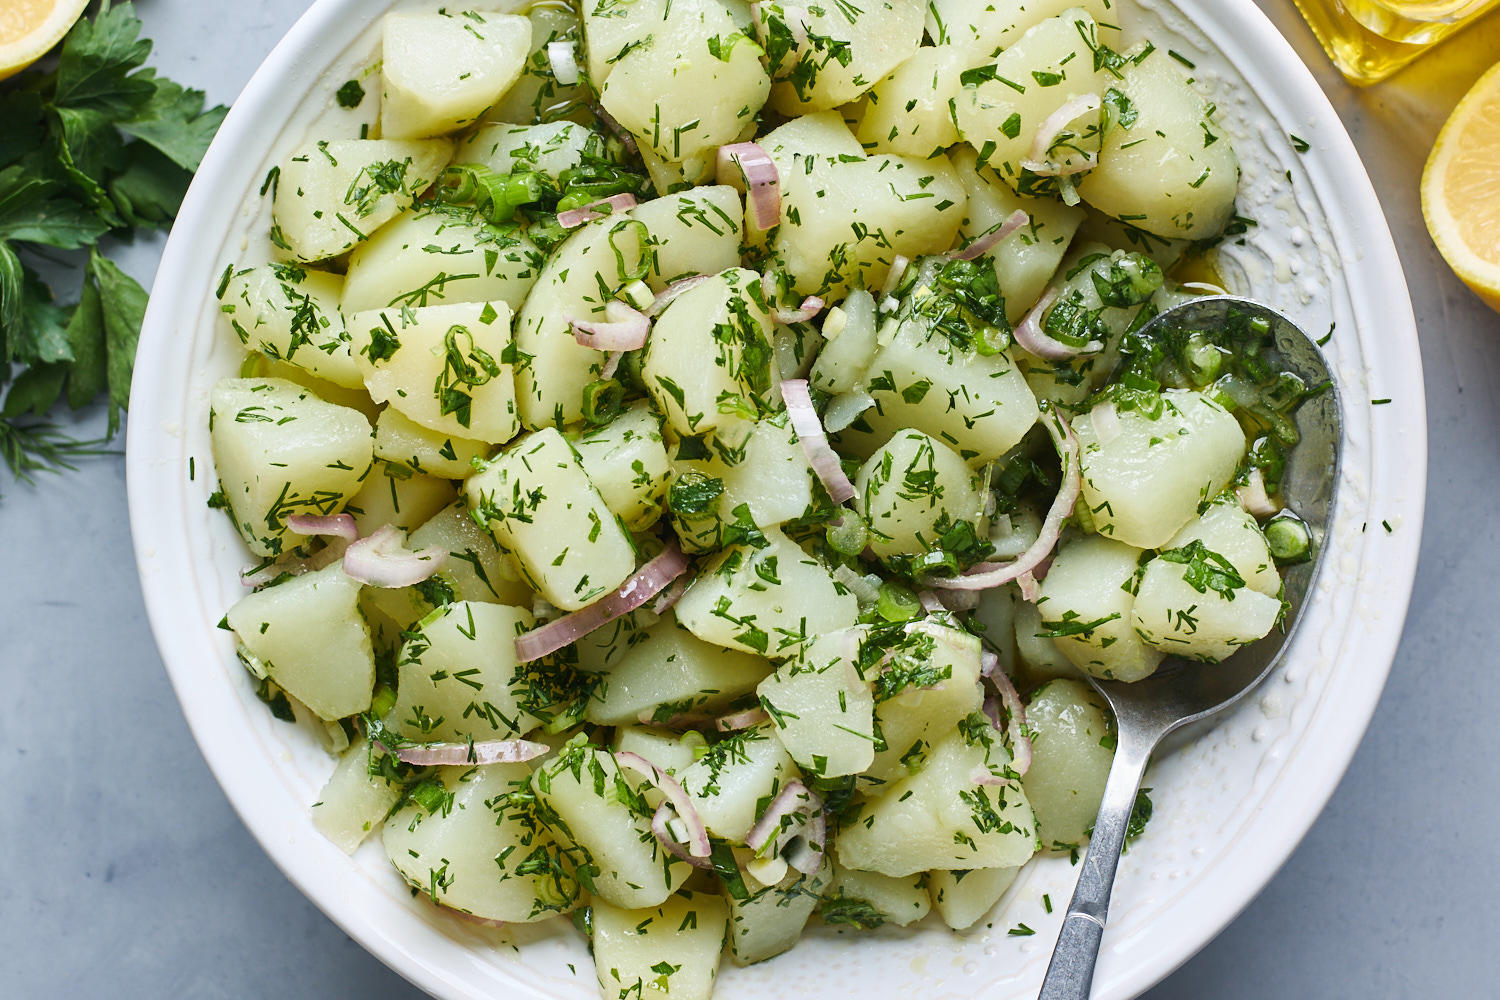 Greek-Style Potato Salad